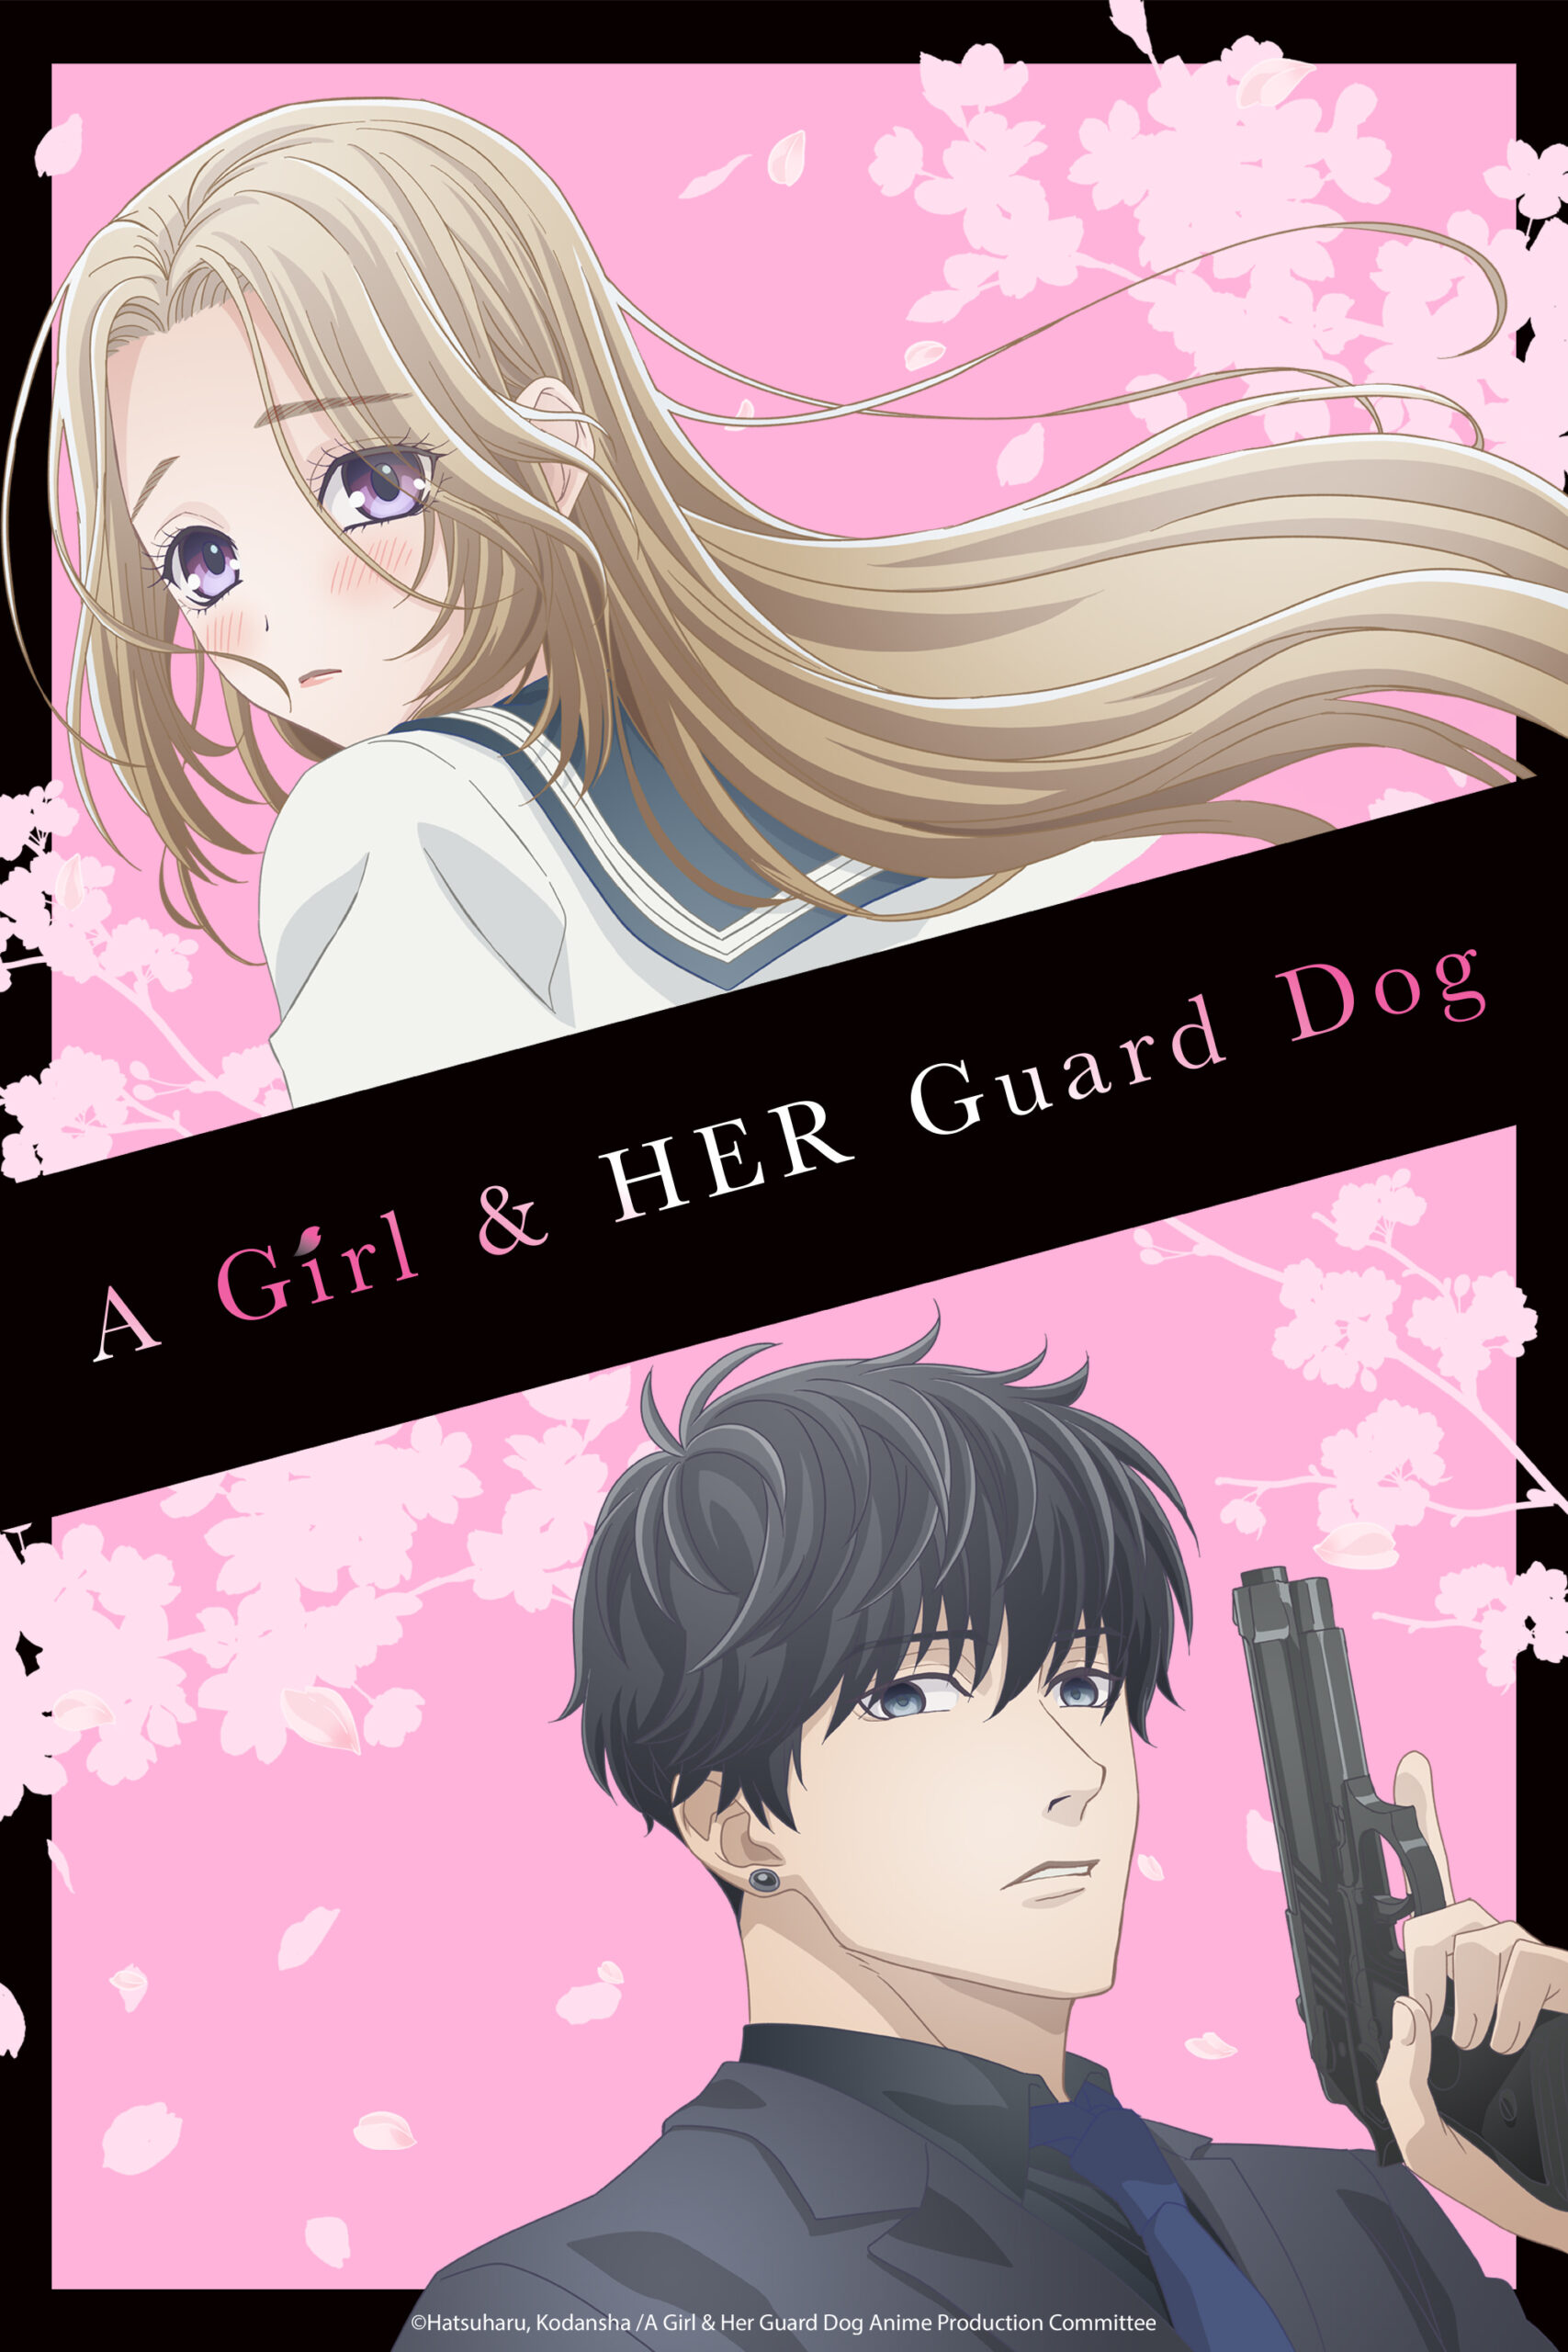 Art Credit: ©Hatsuharu, Kodansha /A Girl & Her Guard Dog Anime Production Committee